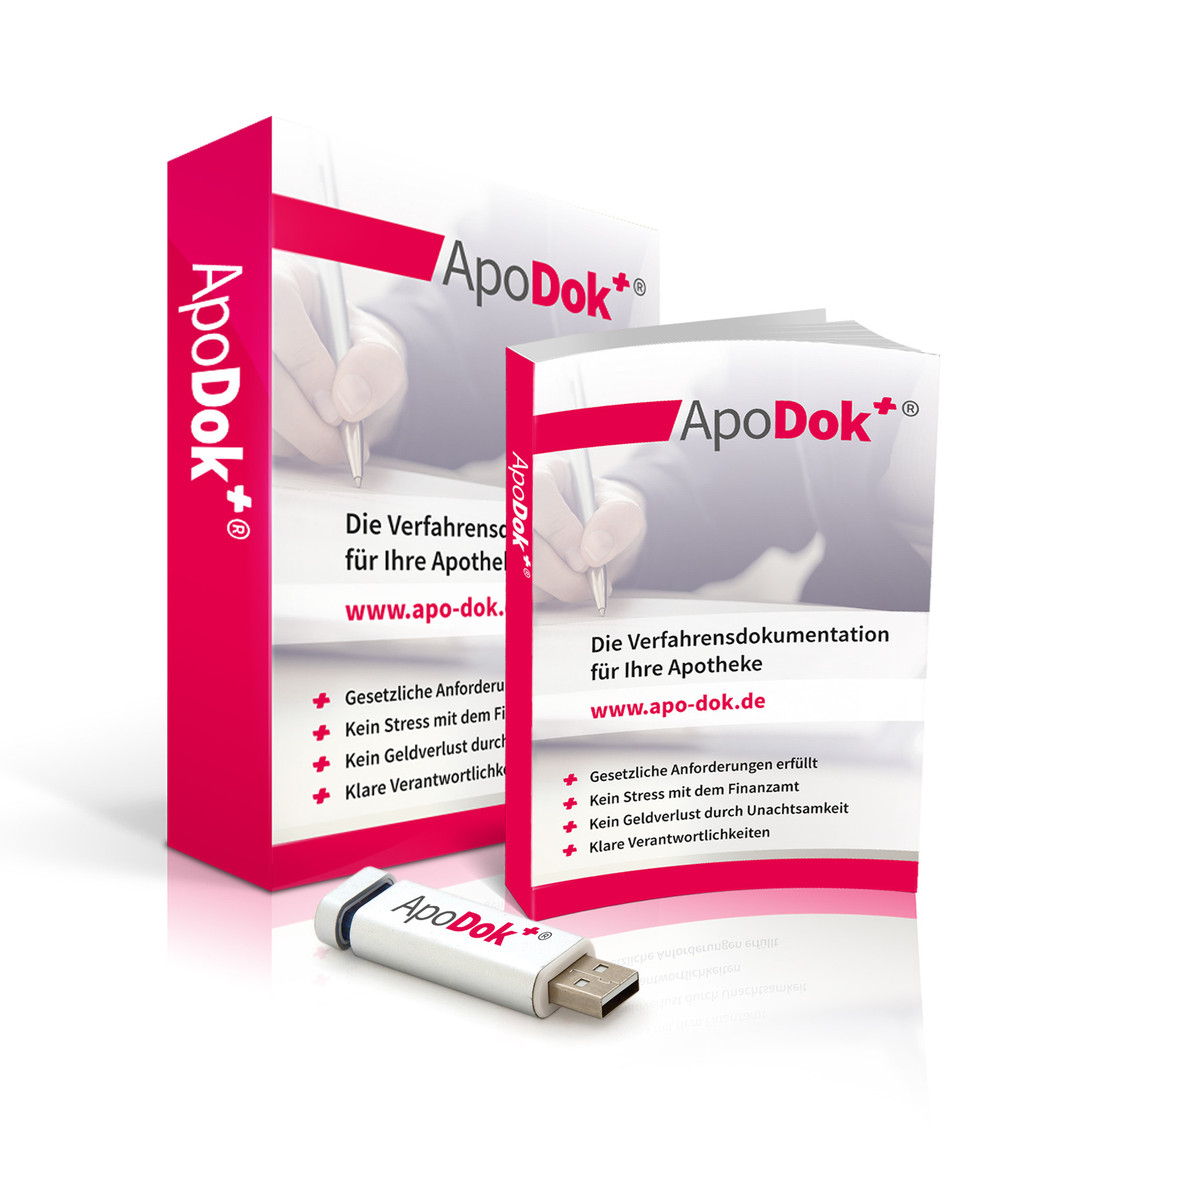 ApoDok® Die Verfahrensdokumentation für Apotheken | APOTHEKE ADHOC